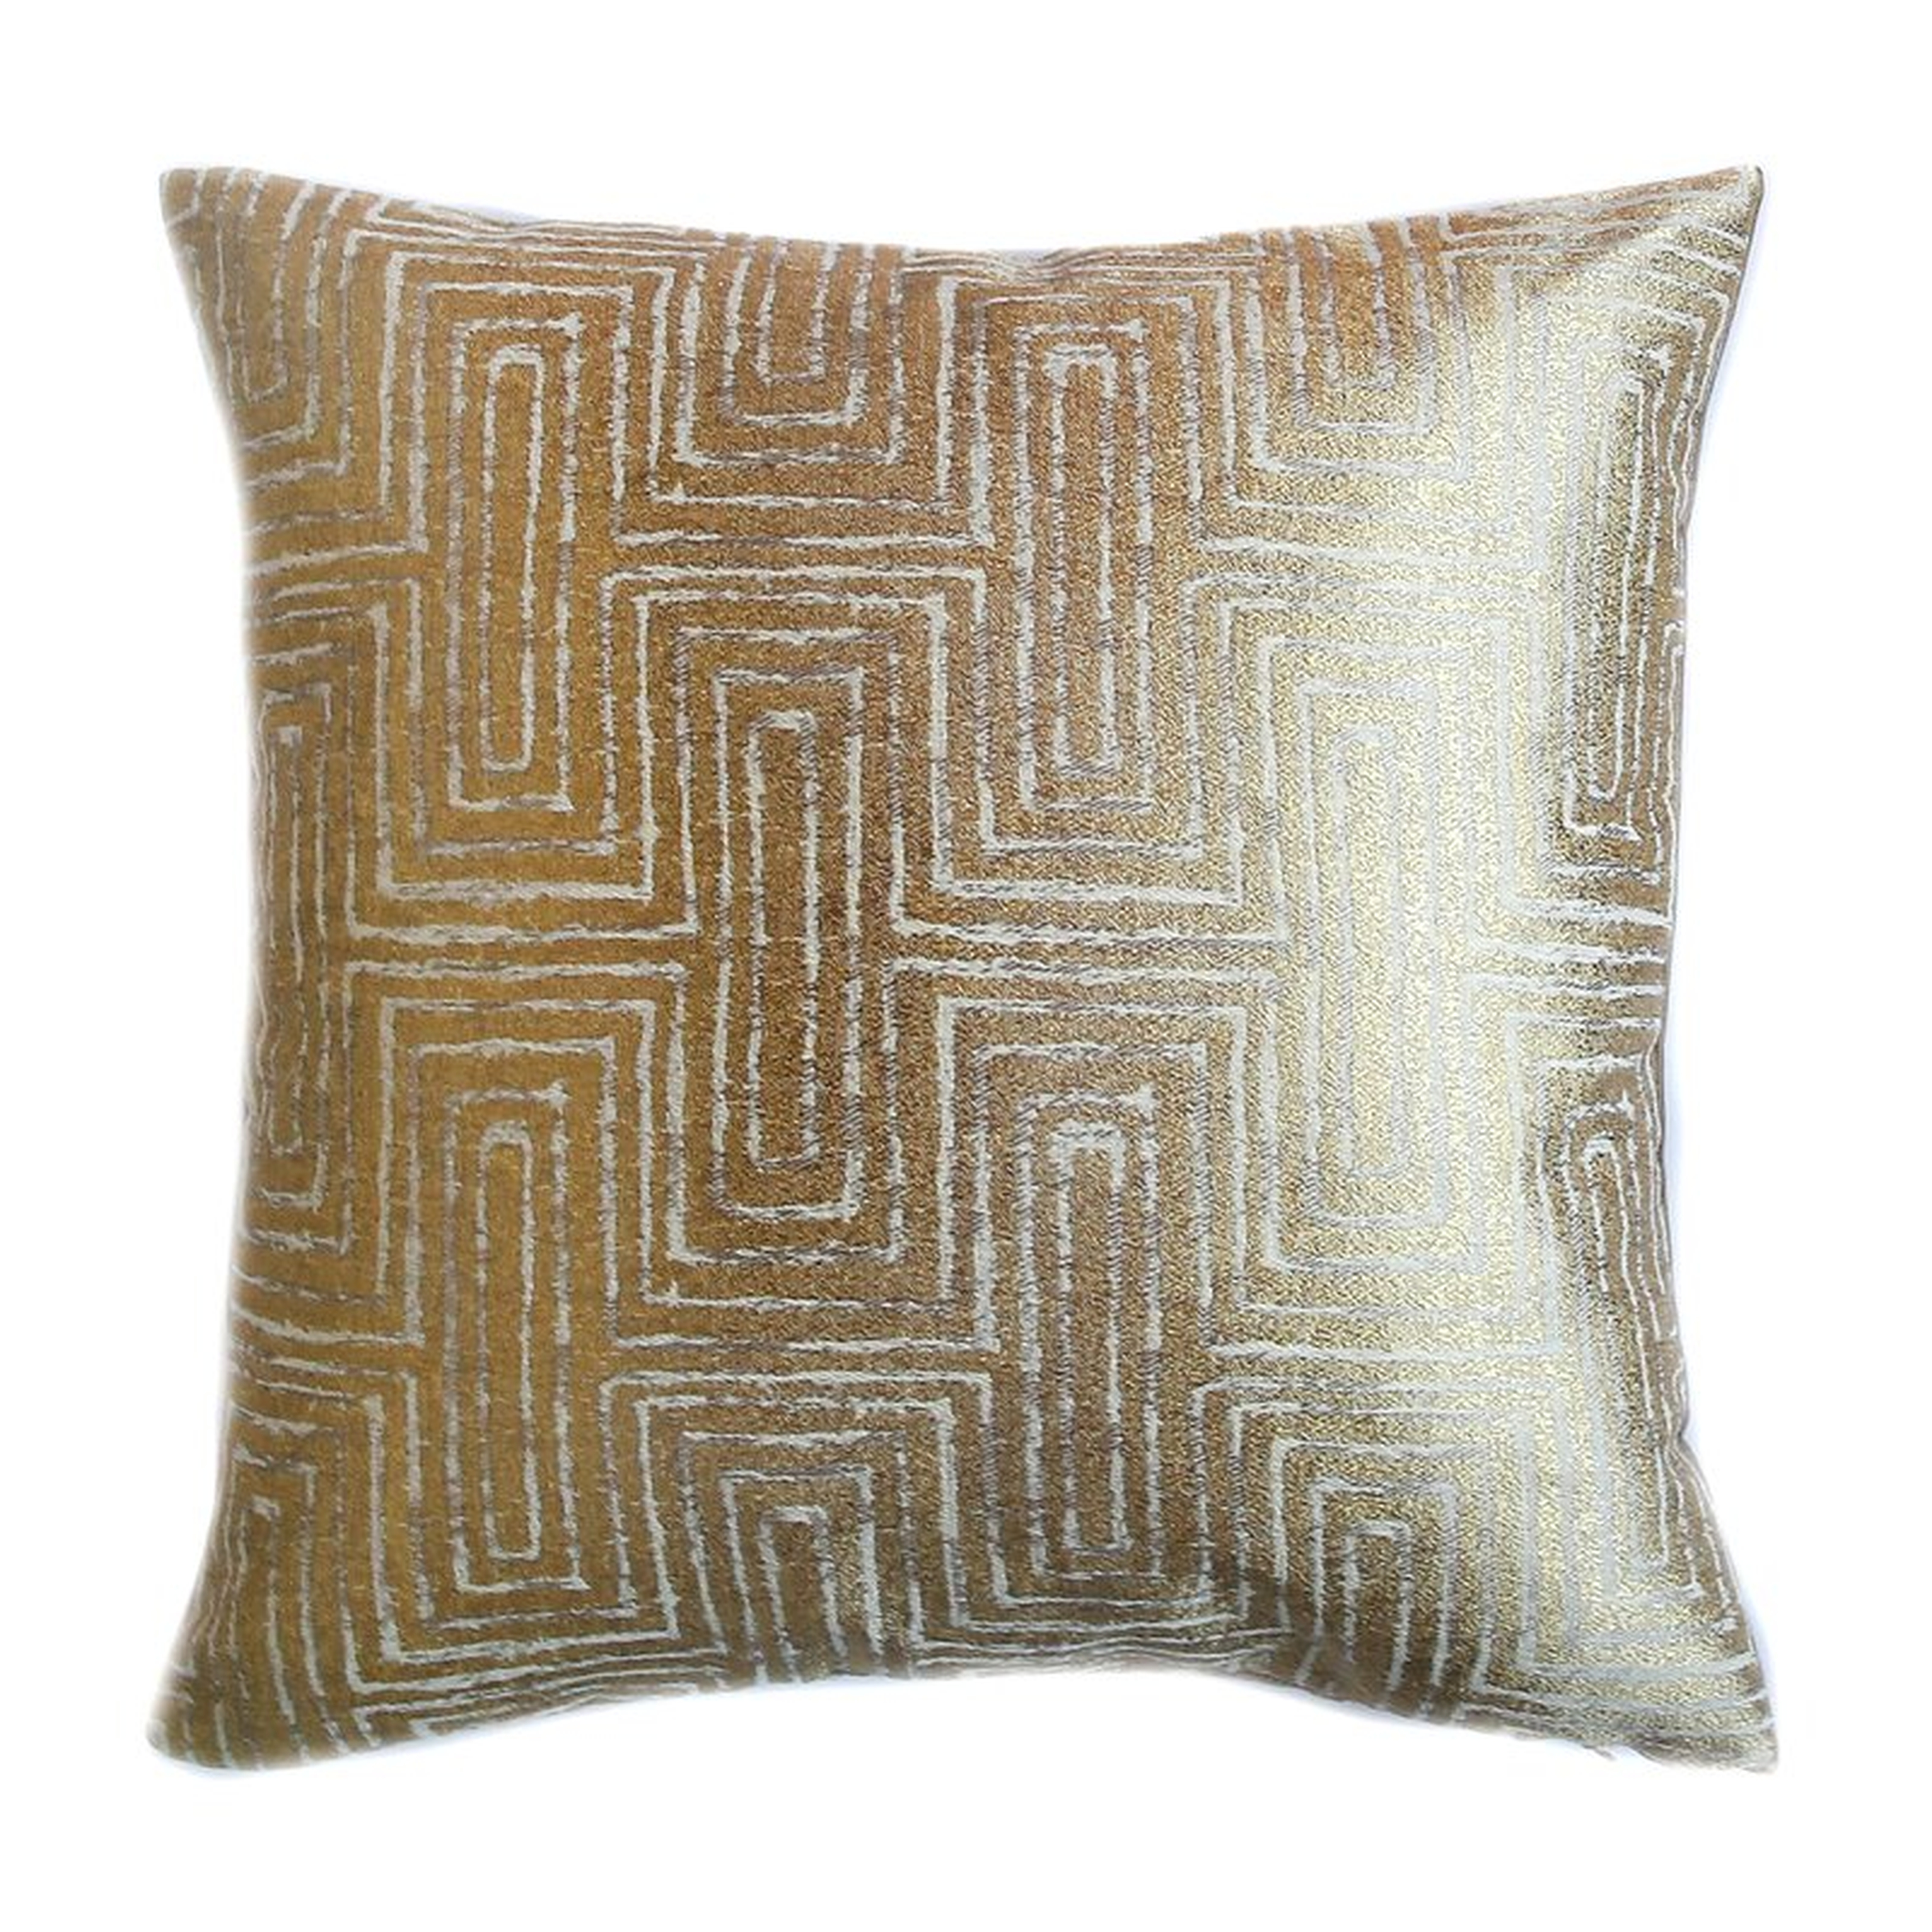 TOSS by Daniel Stuart Studio Sumatra Feathers Geometric Throw Pillow Color: Gold - Perigold